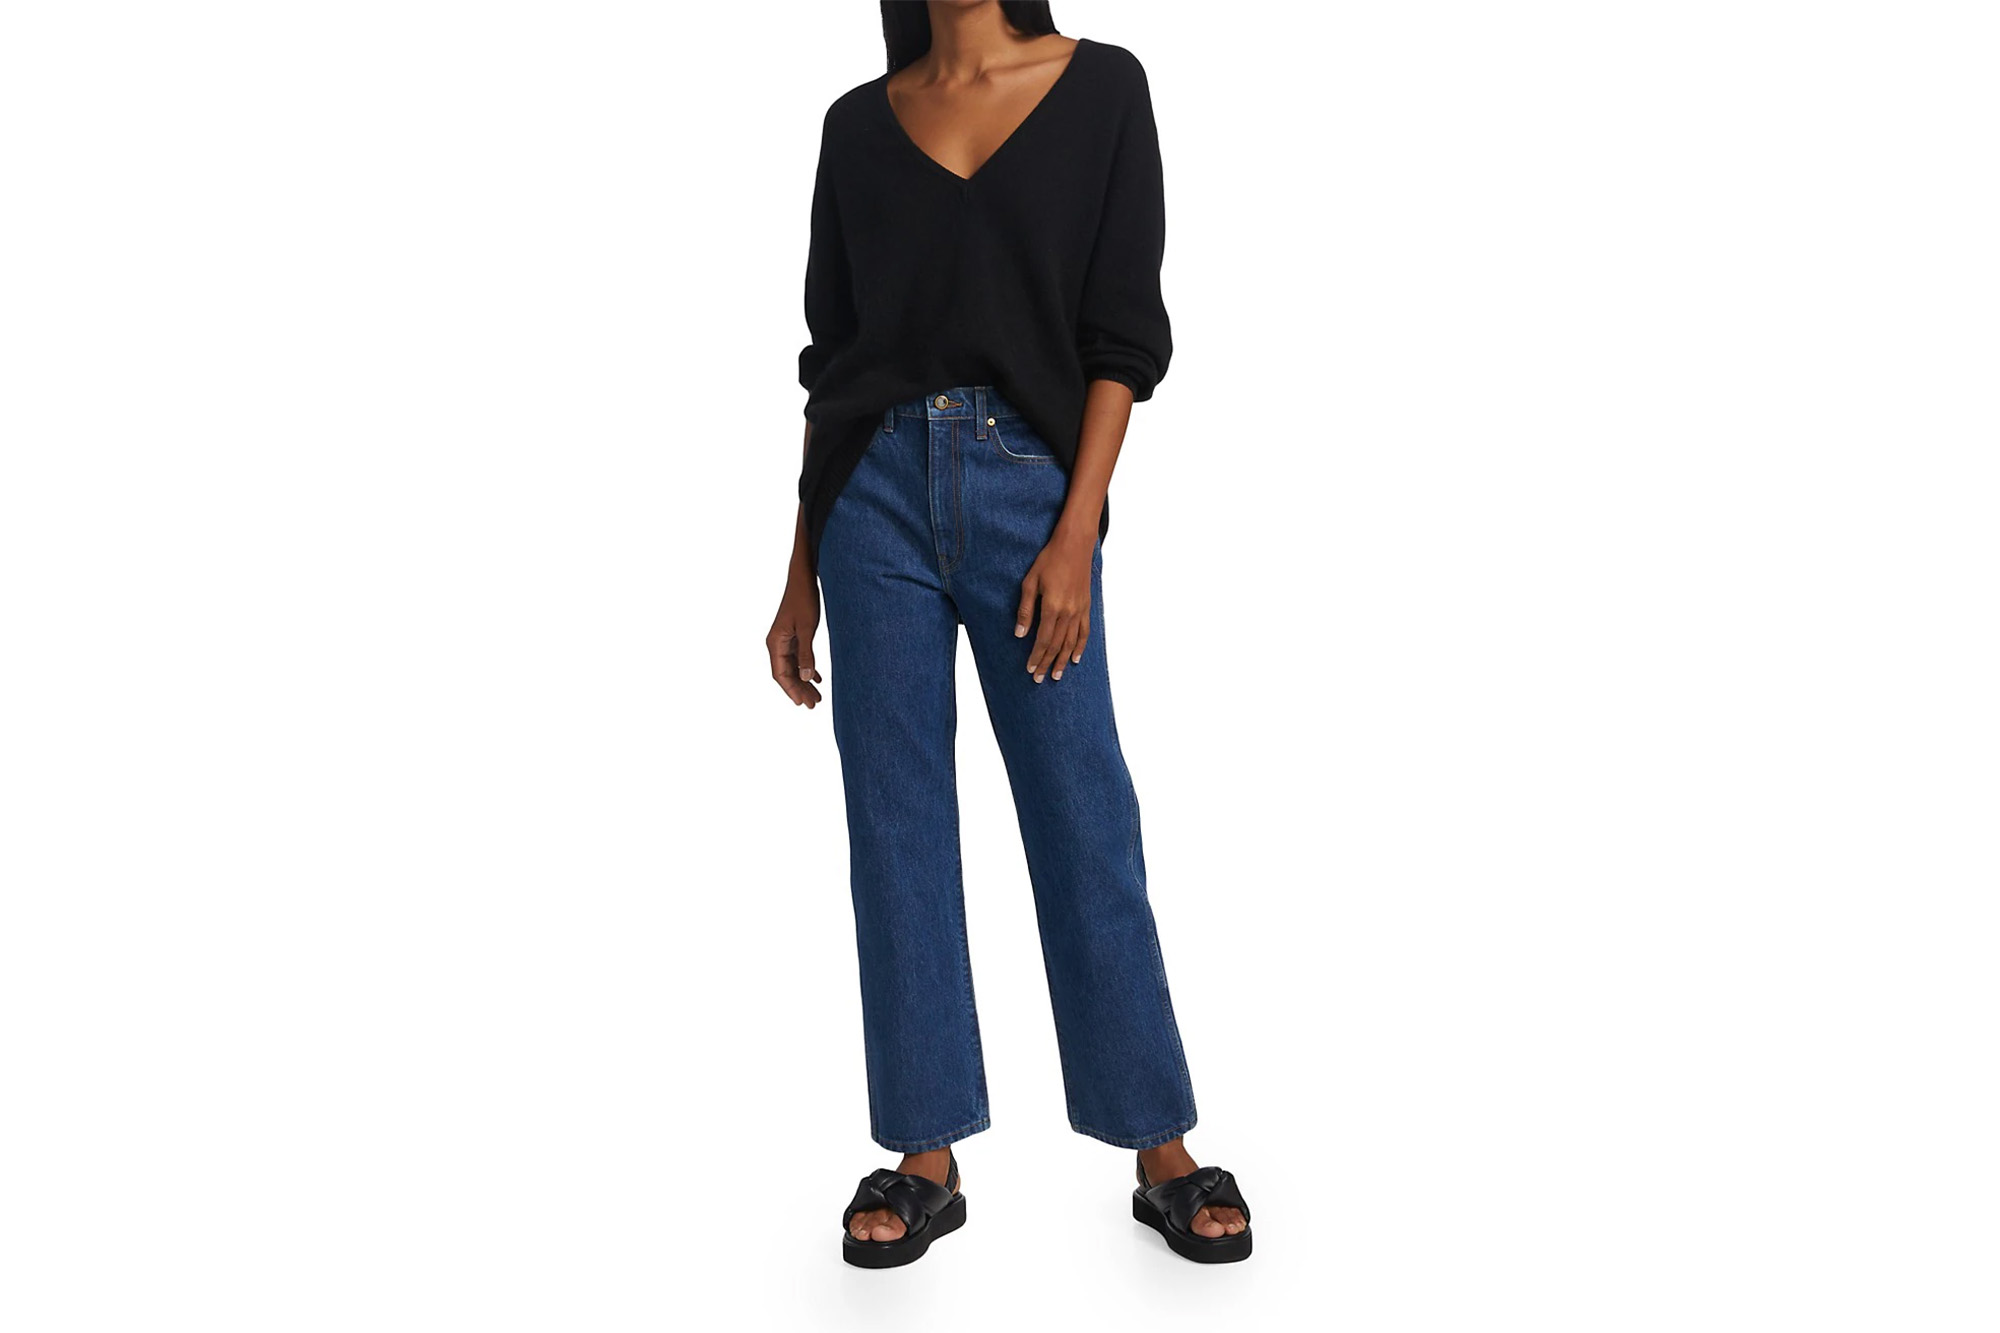 A model in Khaite jeans